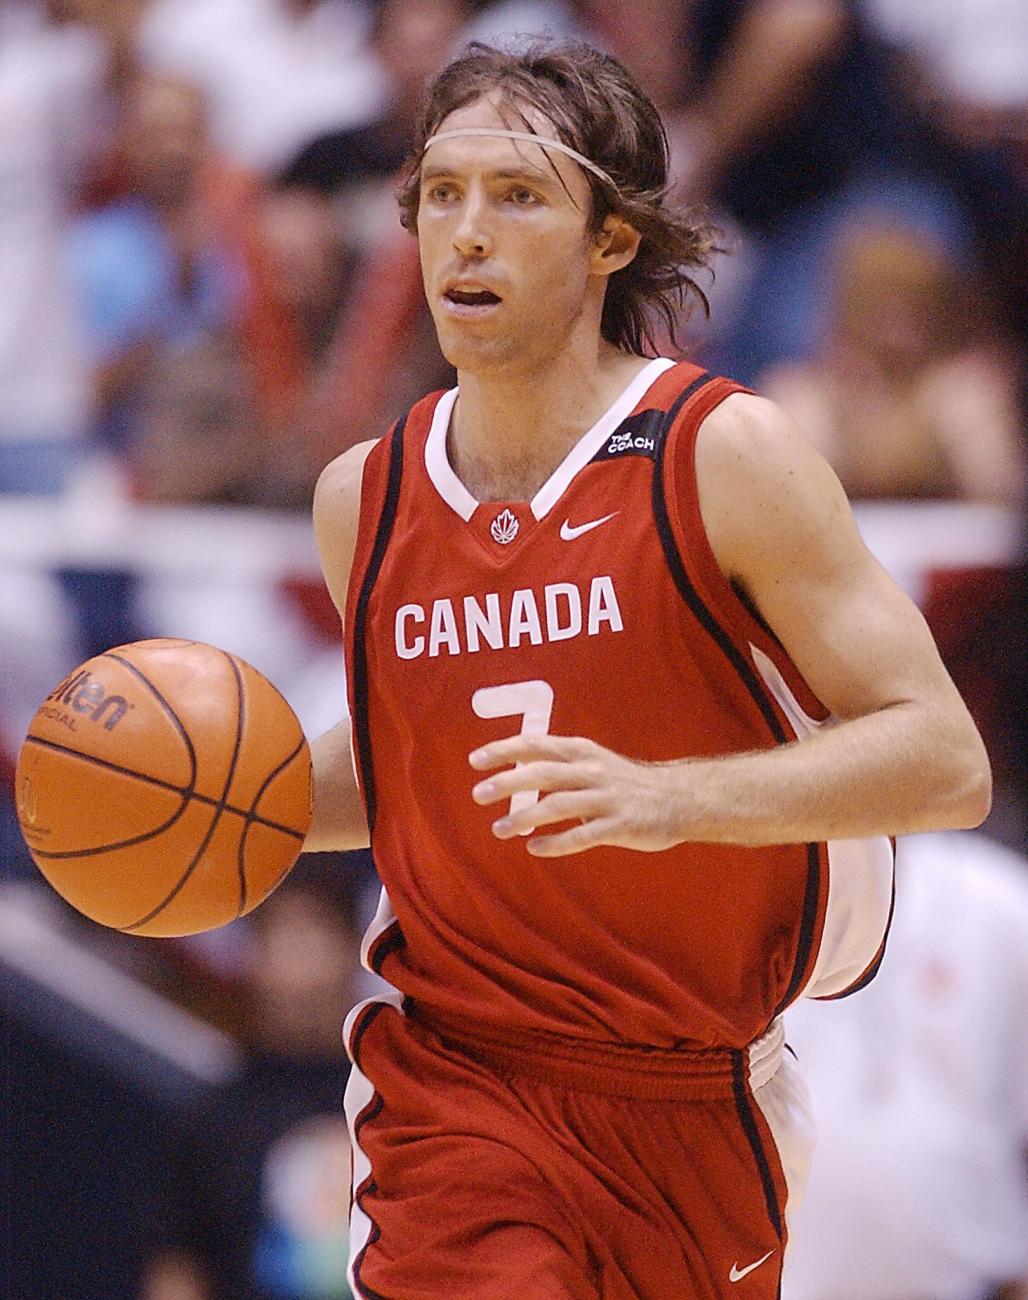 Steve Nash in red on basketball court holding the ball.